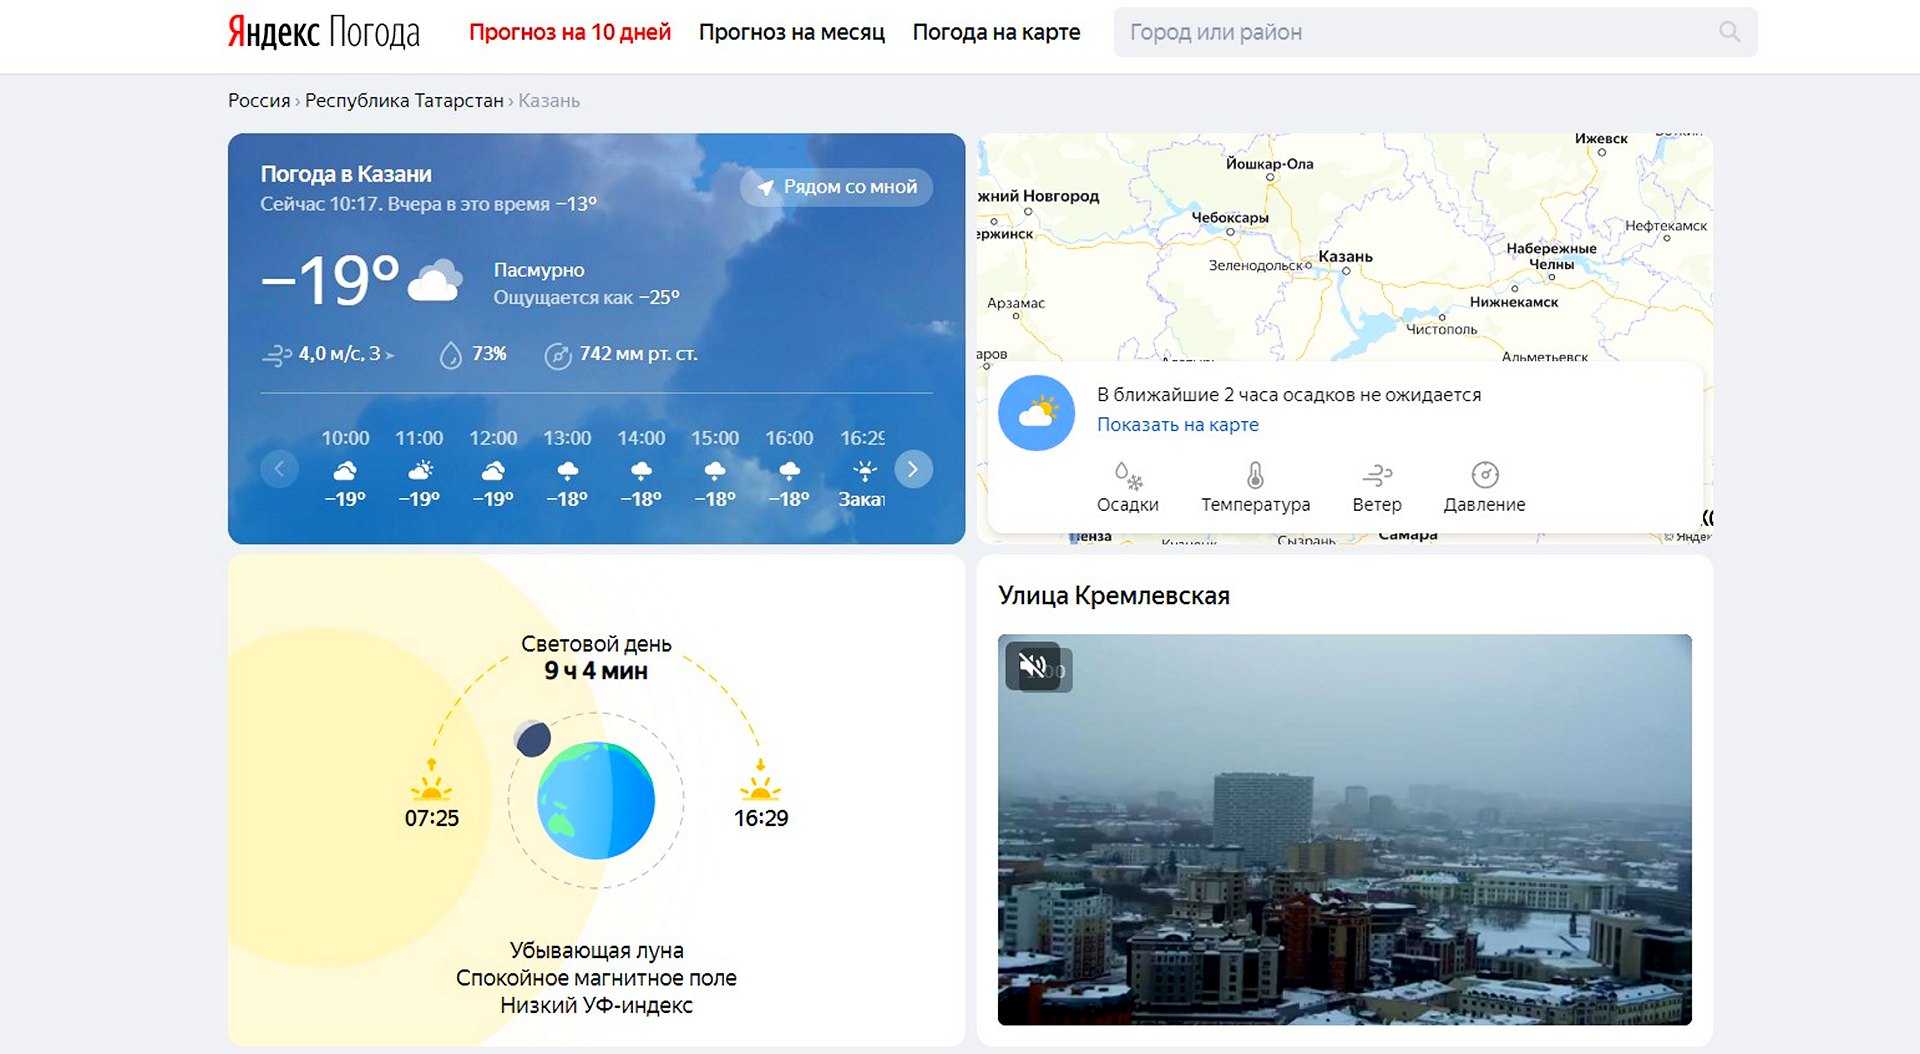 Utm source pogoda. Яндекс погода. Прогноз погоды Яндекс. Яндекс погода карта. Яндекс.погода прогноз погоды.